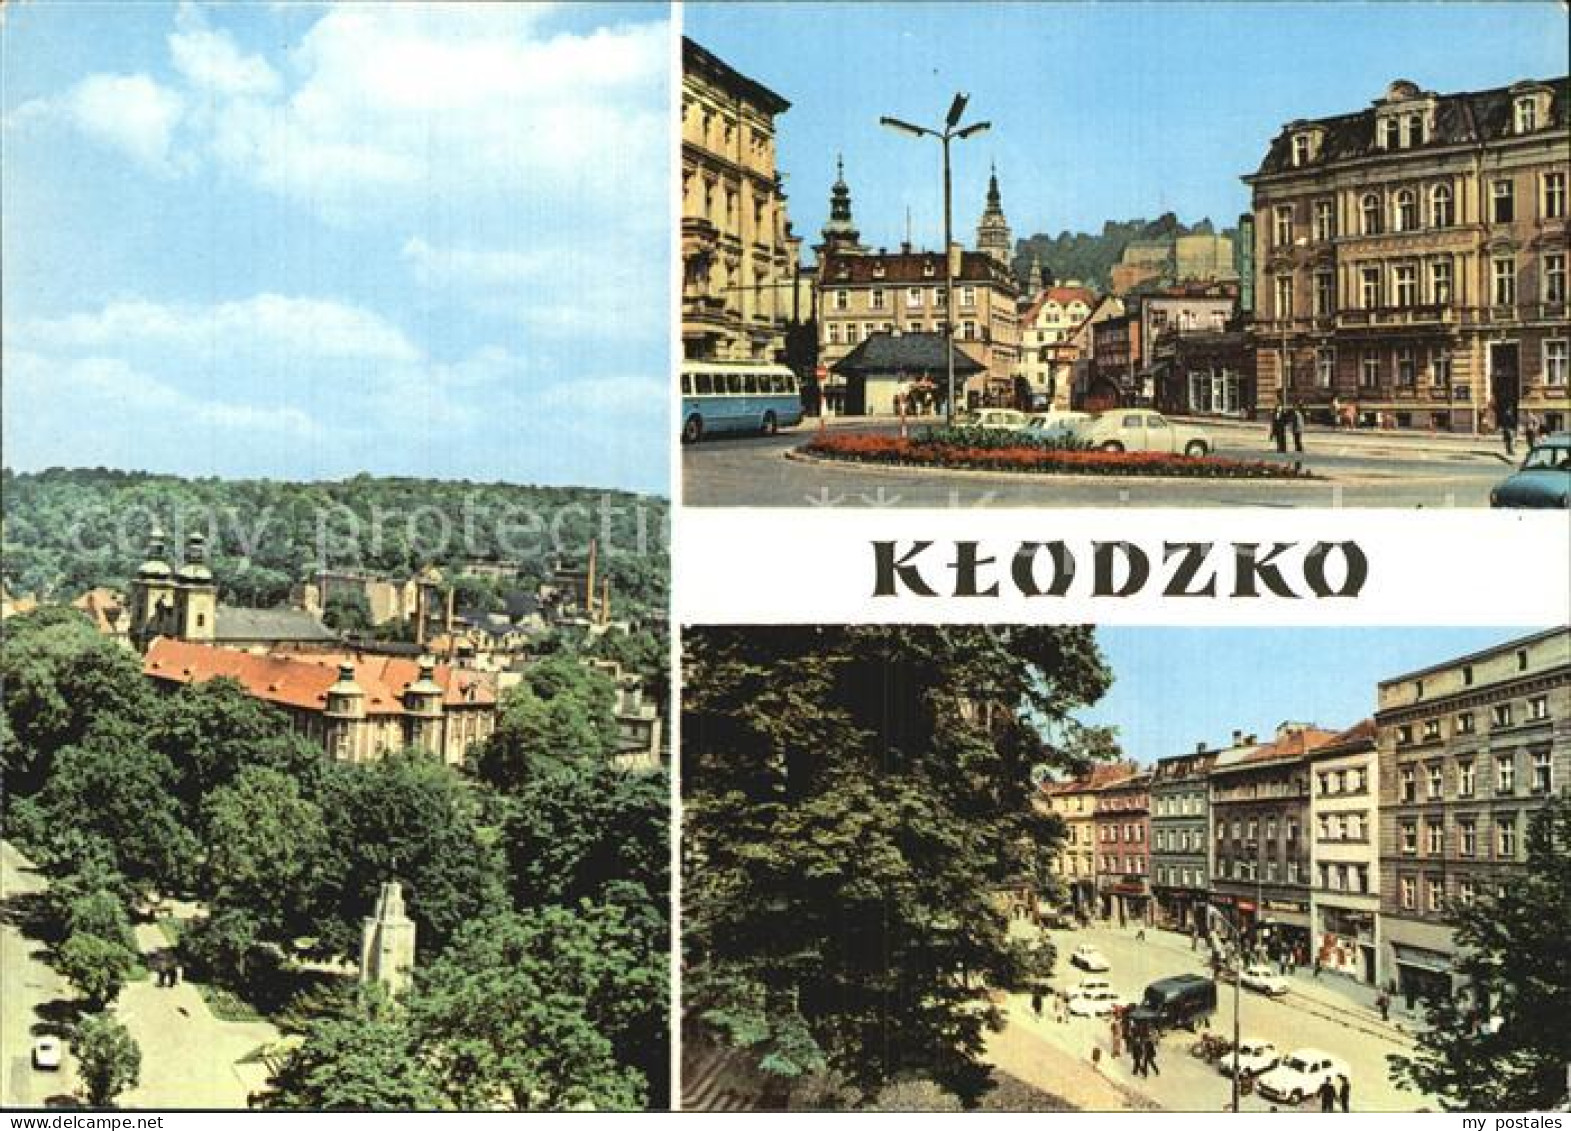 72563101 Klodzko Stadtansichten  Klodzko - Pologne